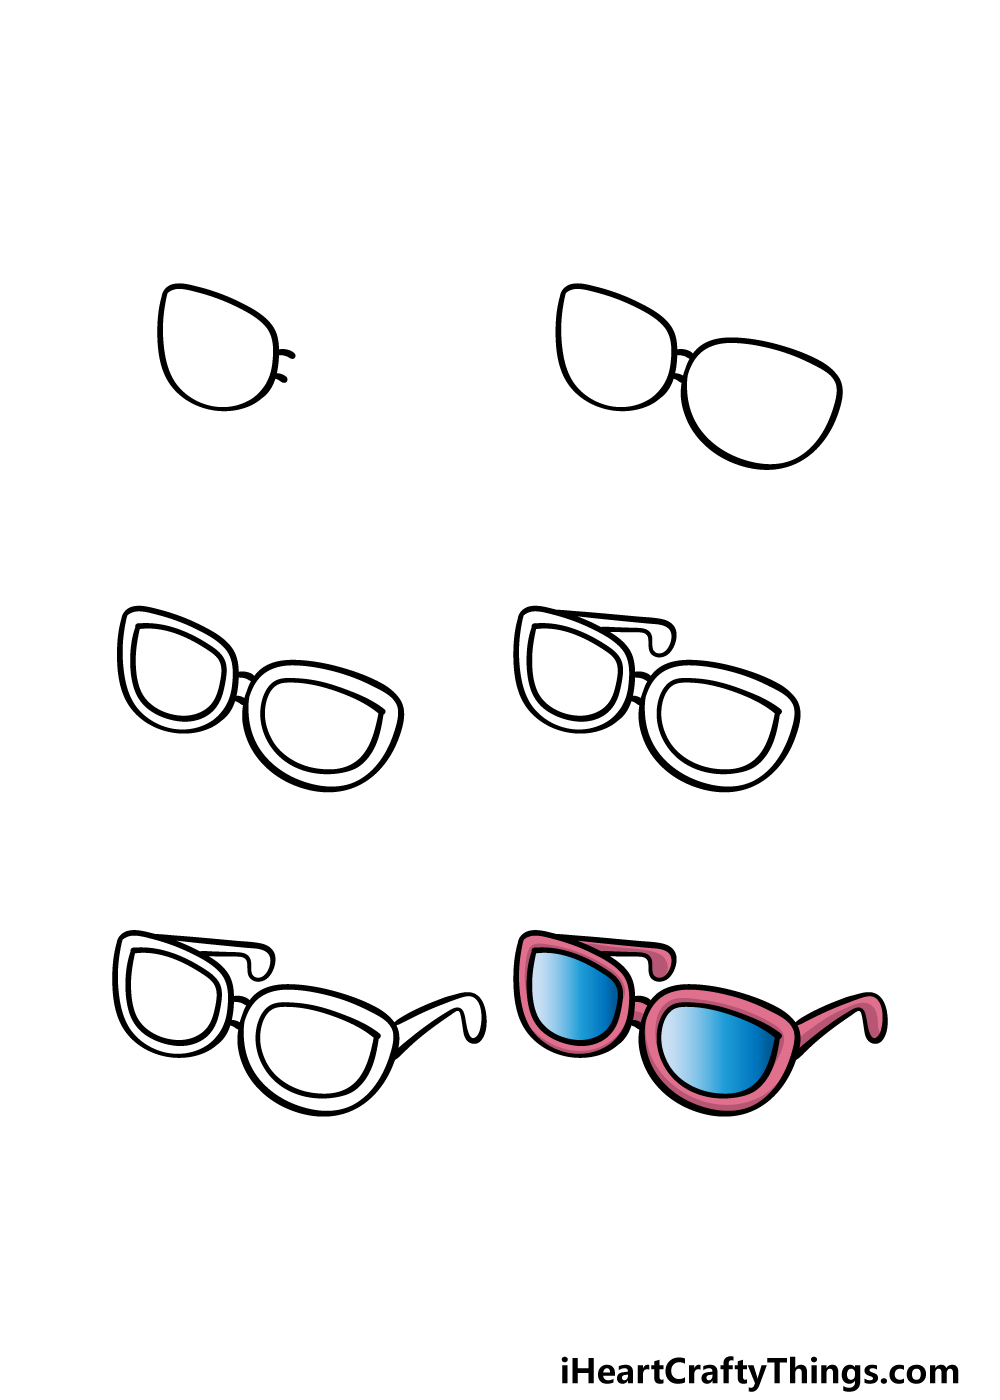 Cartoon Sunglasses Drawing - How To Draw Cartoon Sunglasses Step By Step